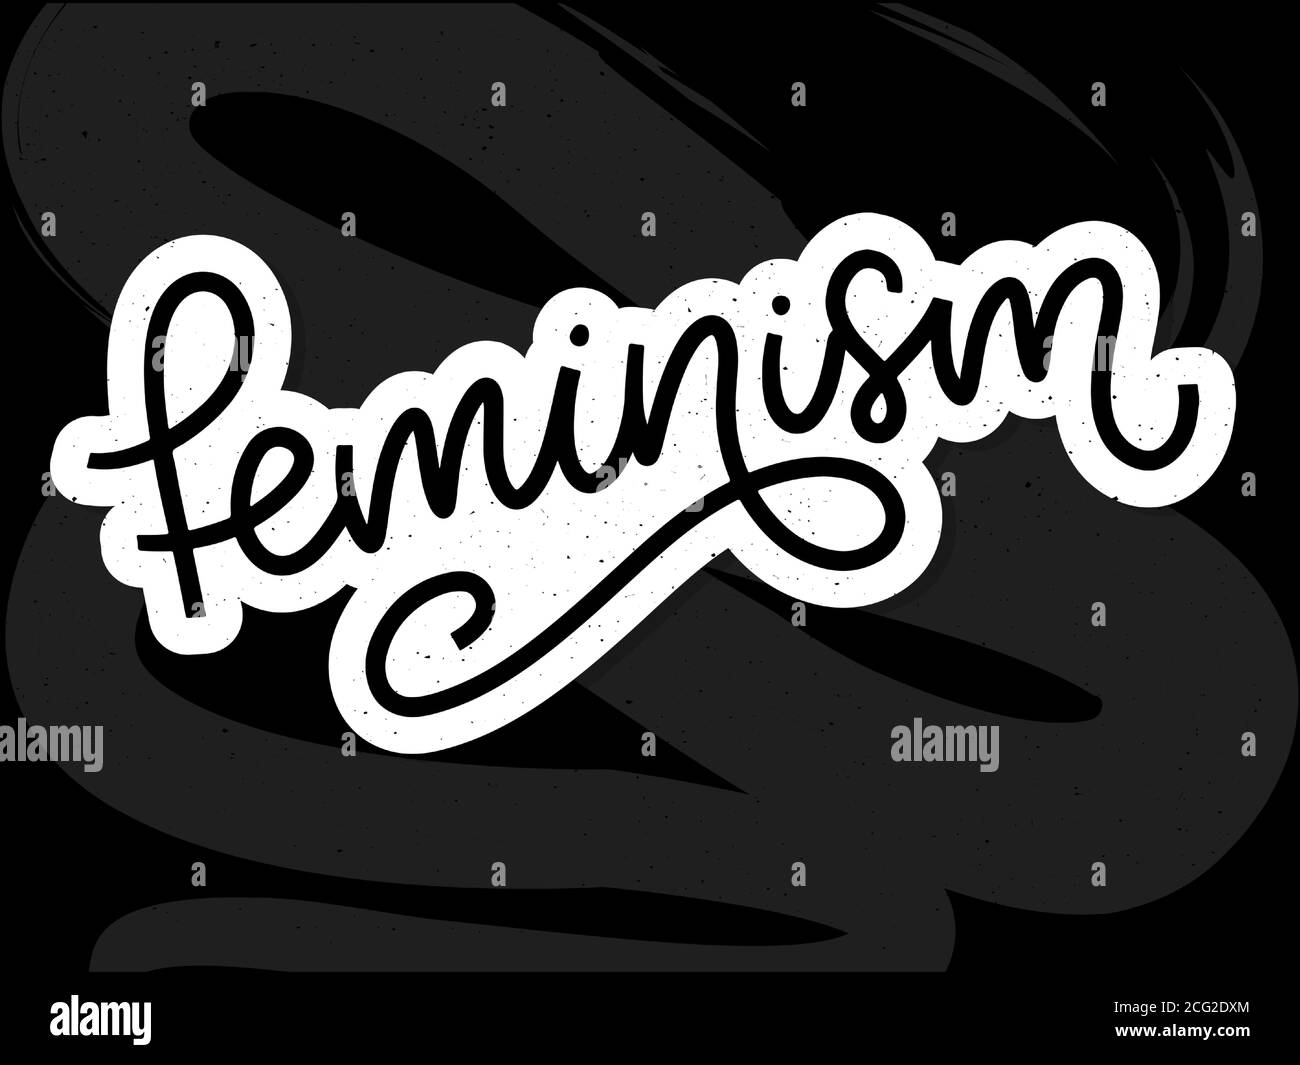 Typographic design. feminism letter. Graphic element. Typography lettering design. Woman motivational slogan. Feminism slogan. Girl power quote Stock Vector